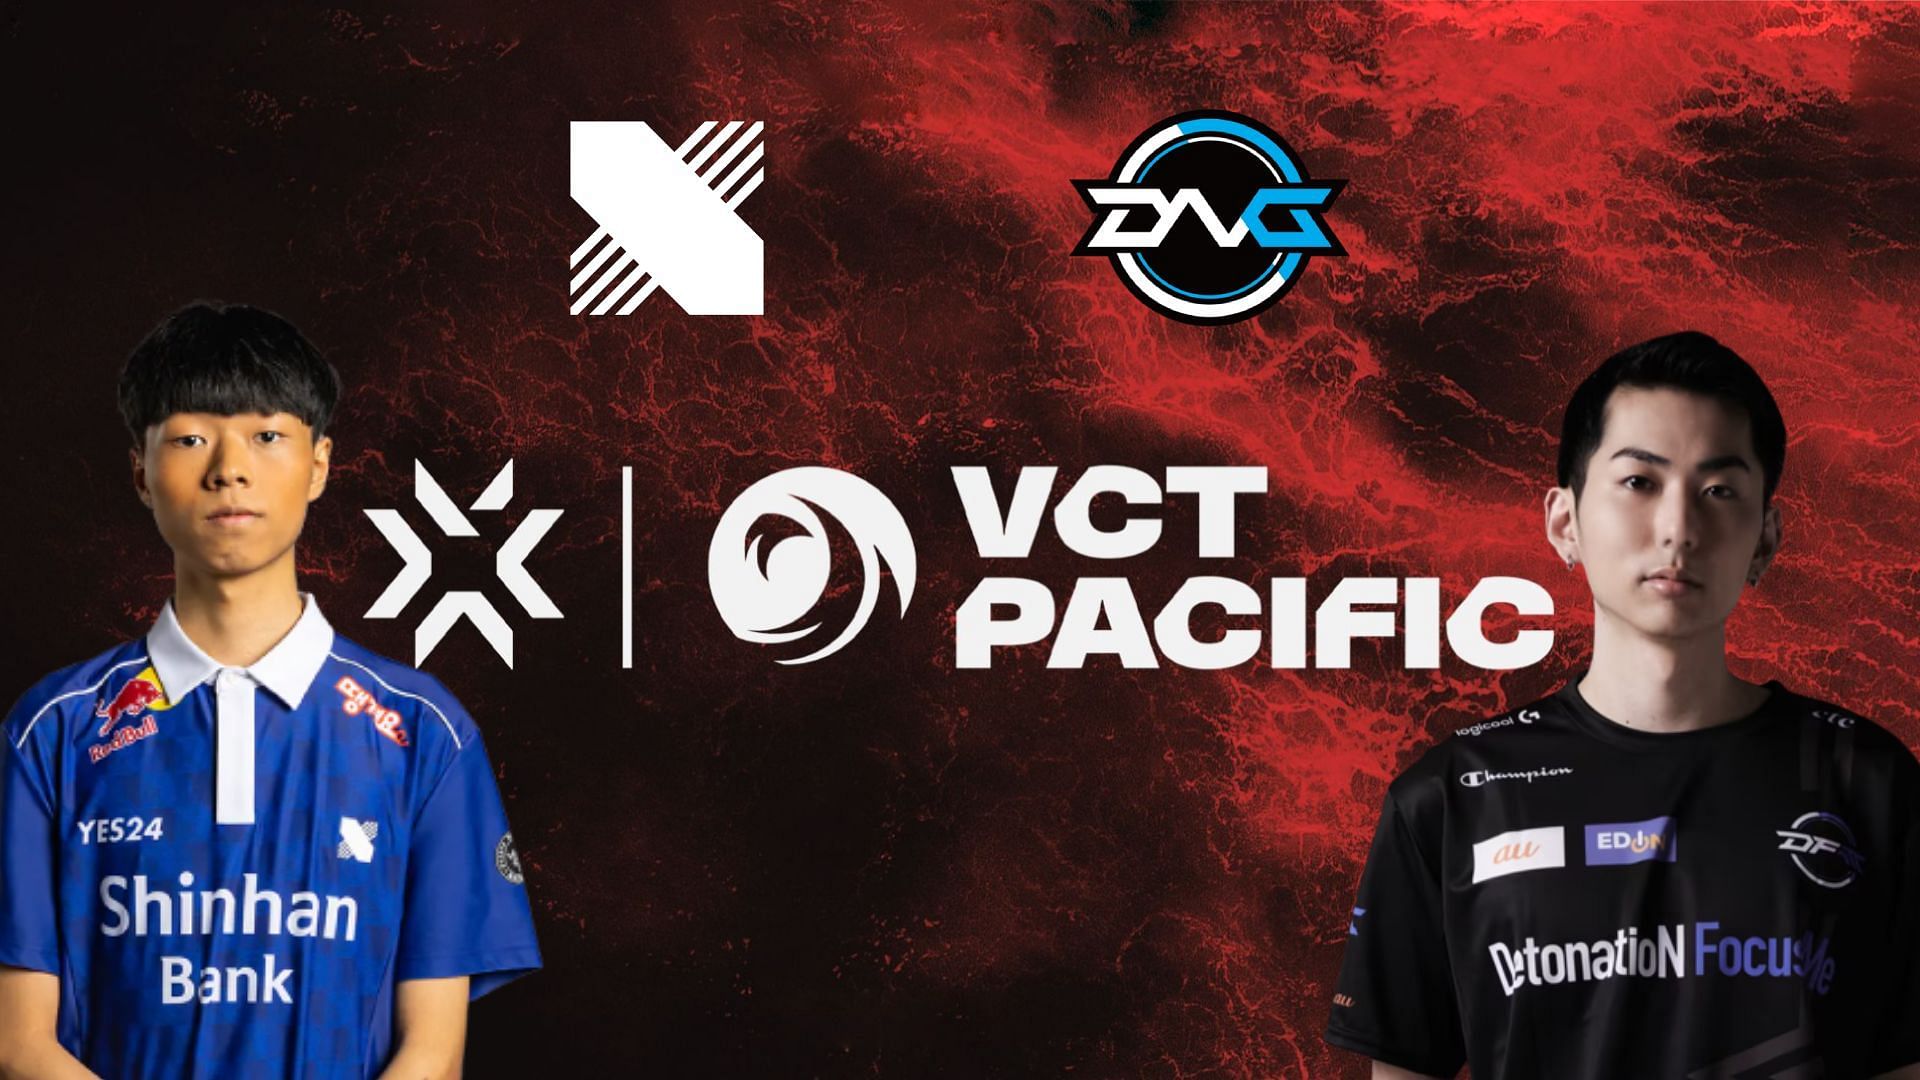 DRX vs Detonation FocusMe - VCT Pacific League 2023 (Image via Sportskeeda)